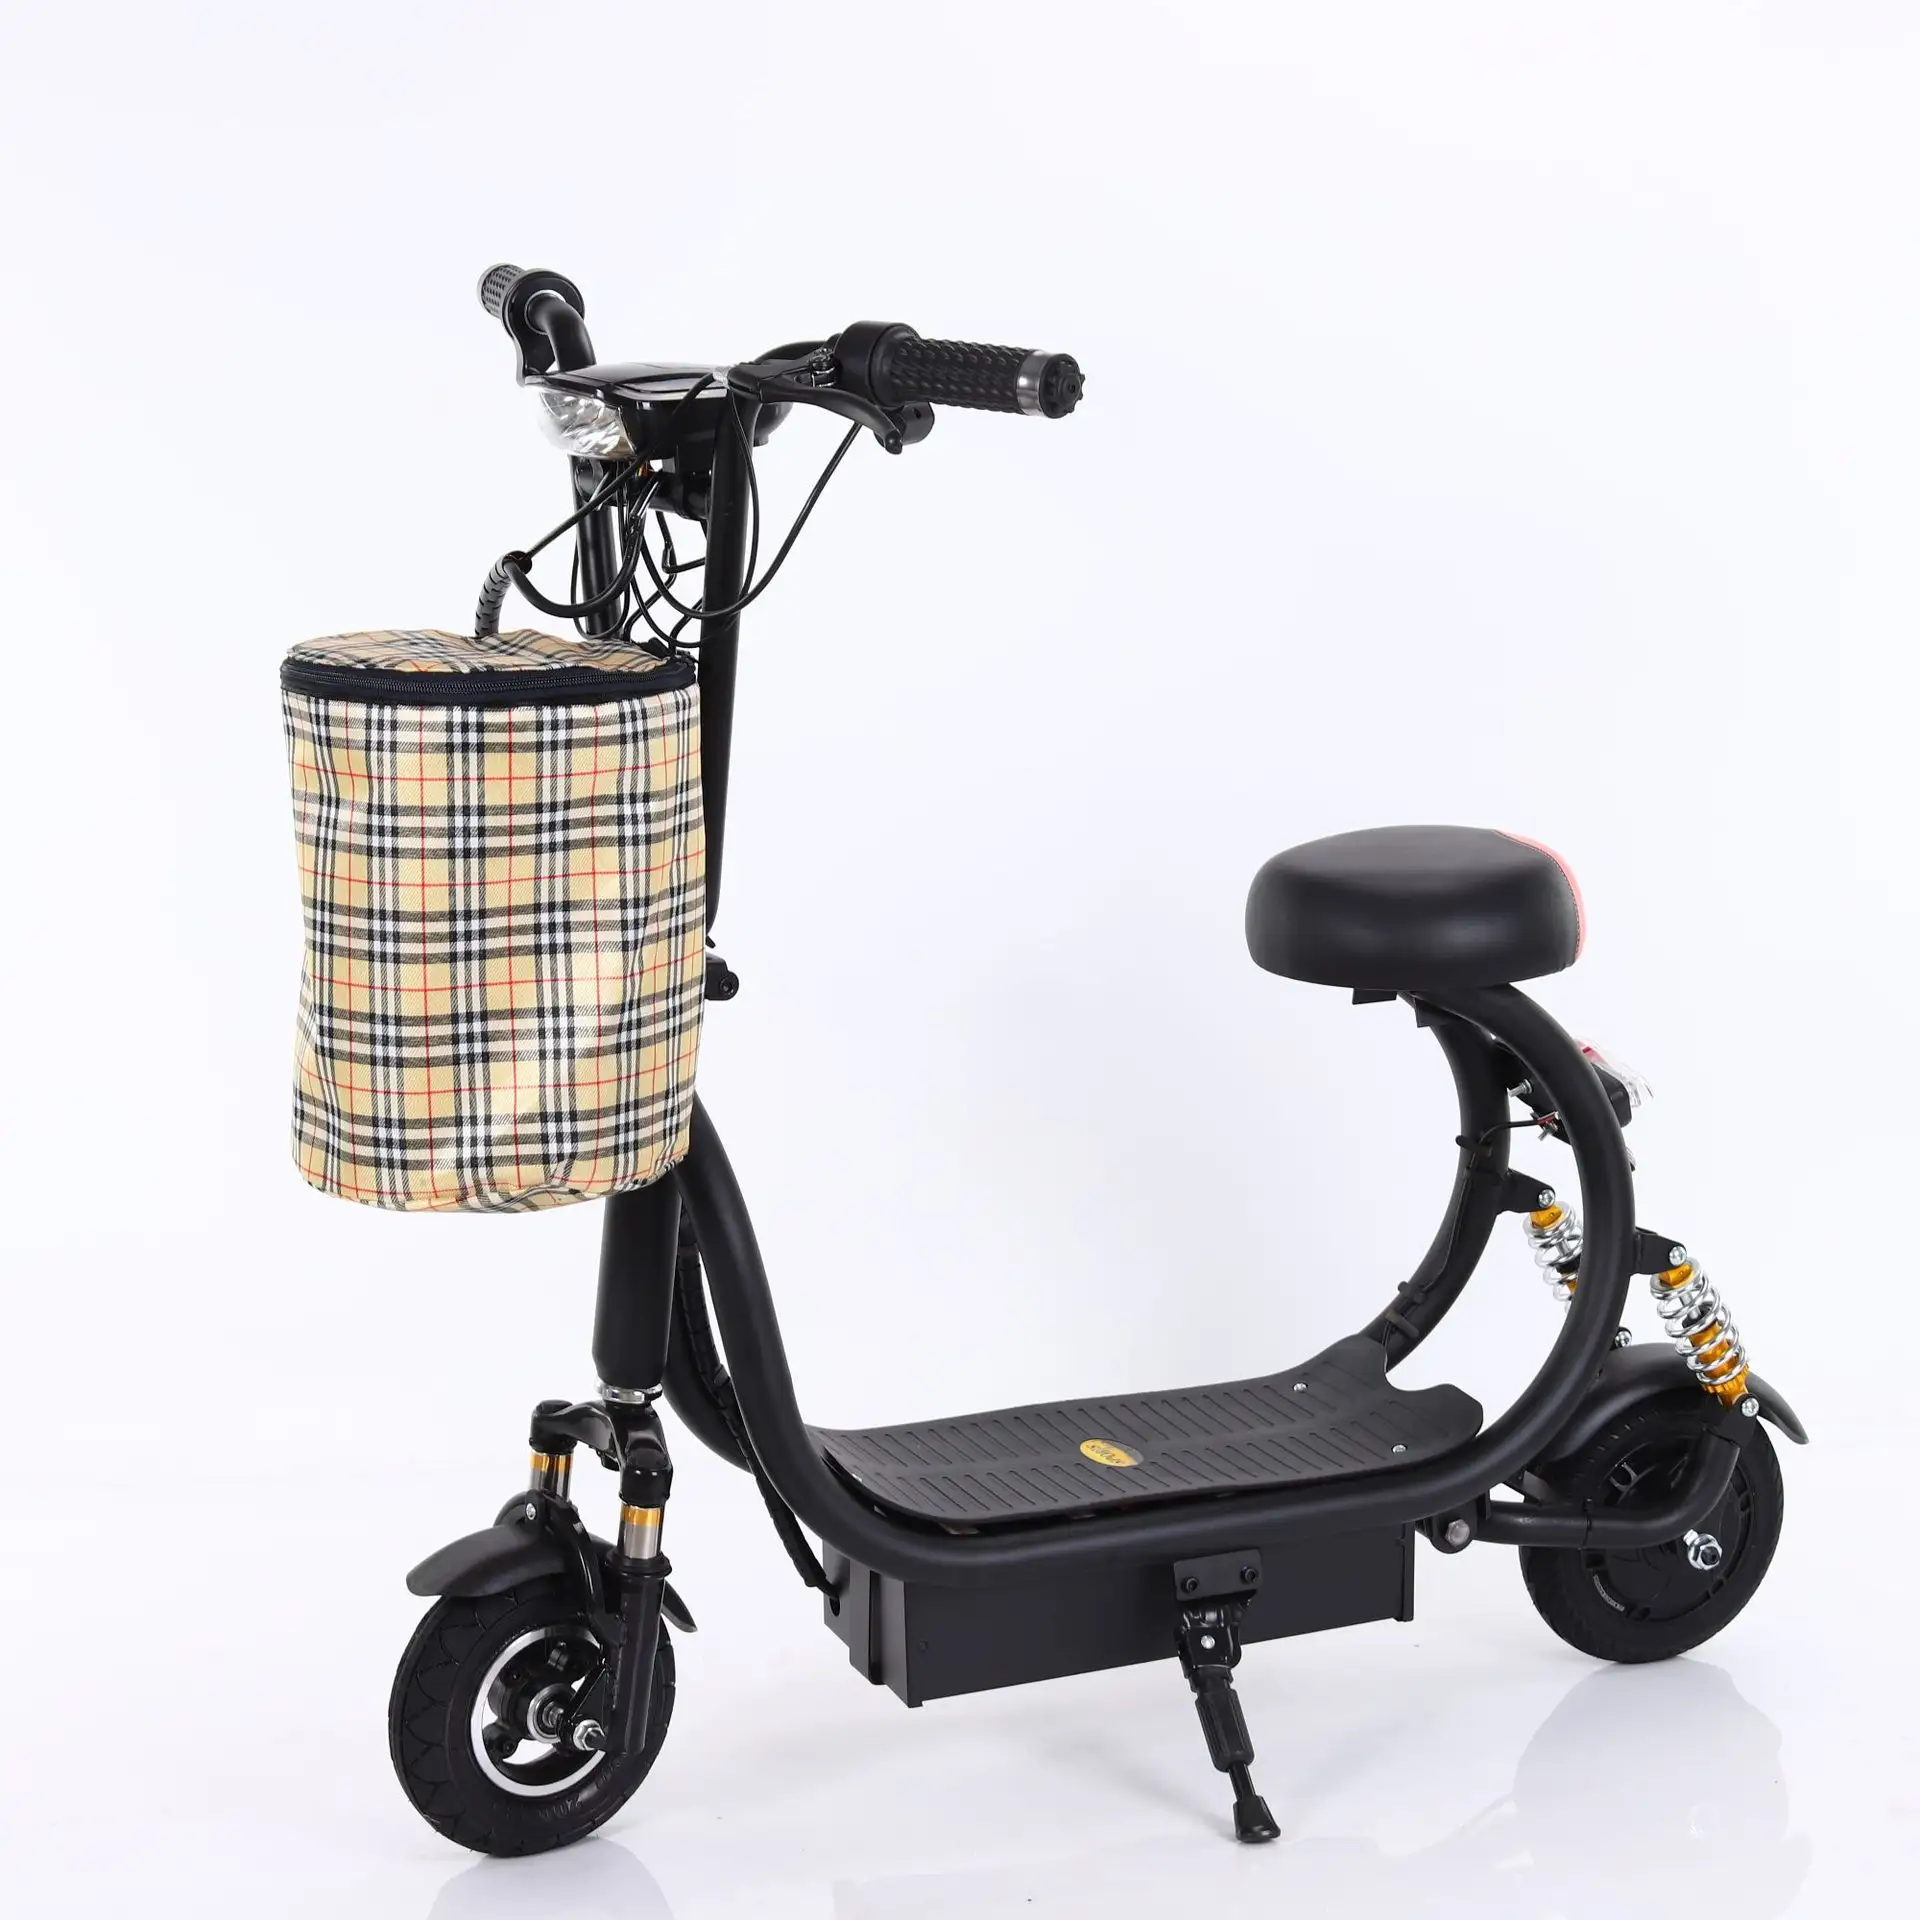 Patinete eléctrico con asiento para adultos, mini scooter Eléctrico plegable de dos ruedas, barato, de China